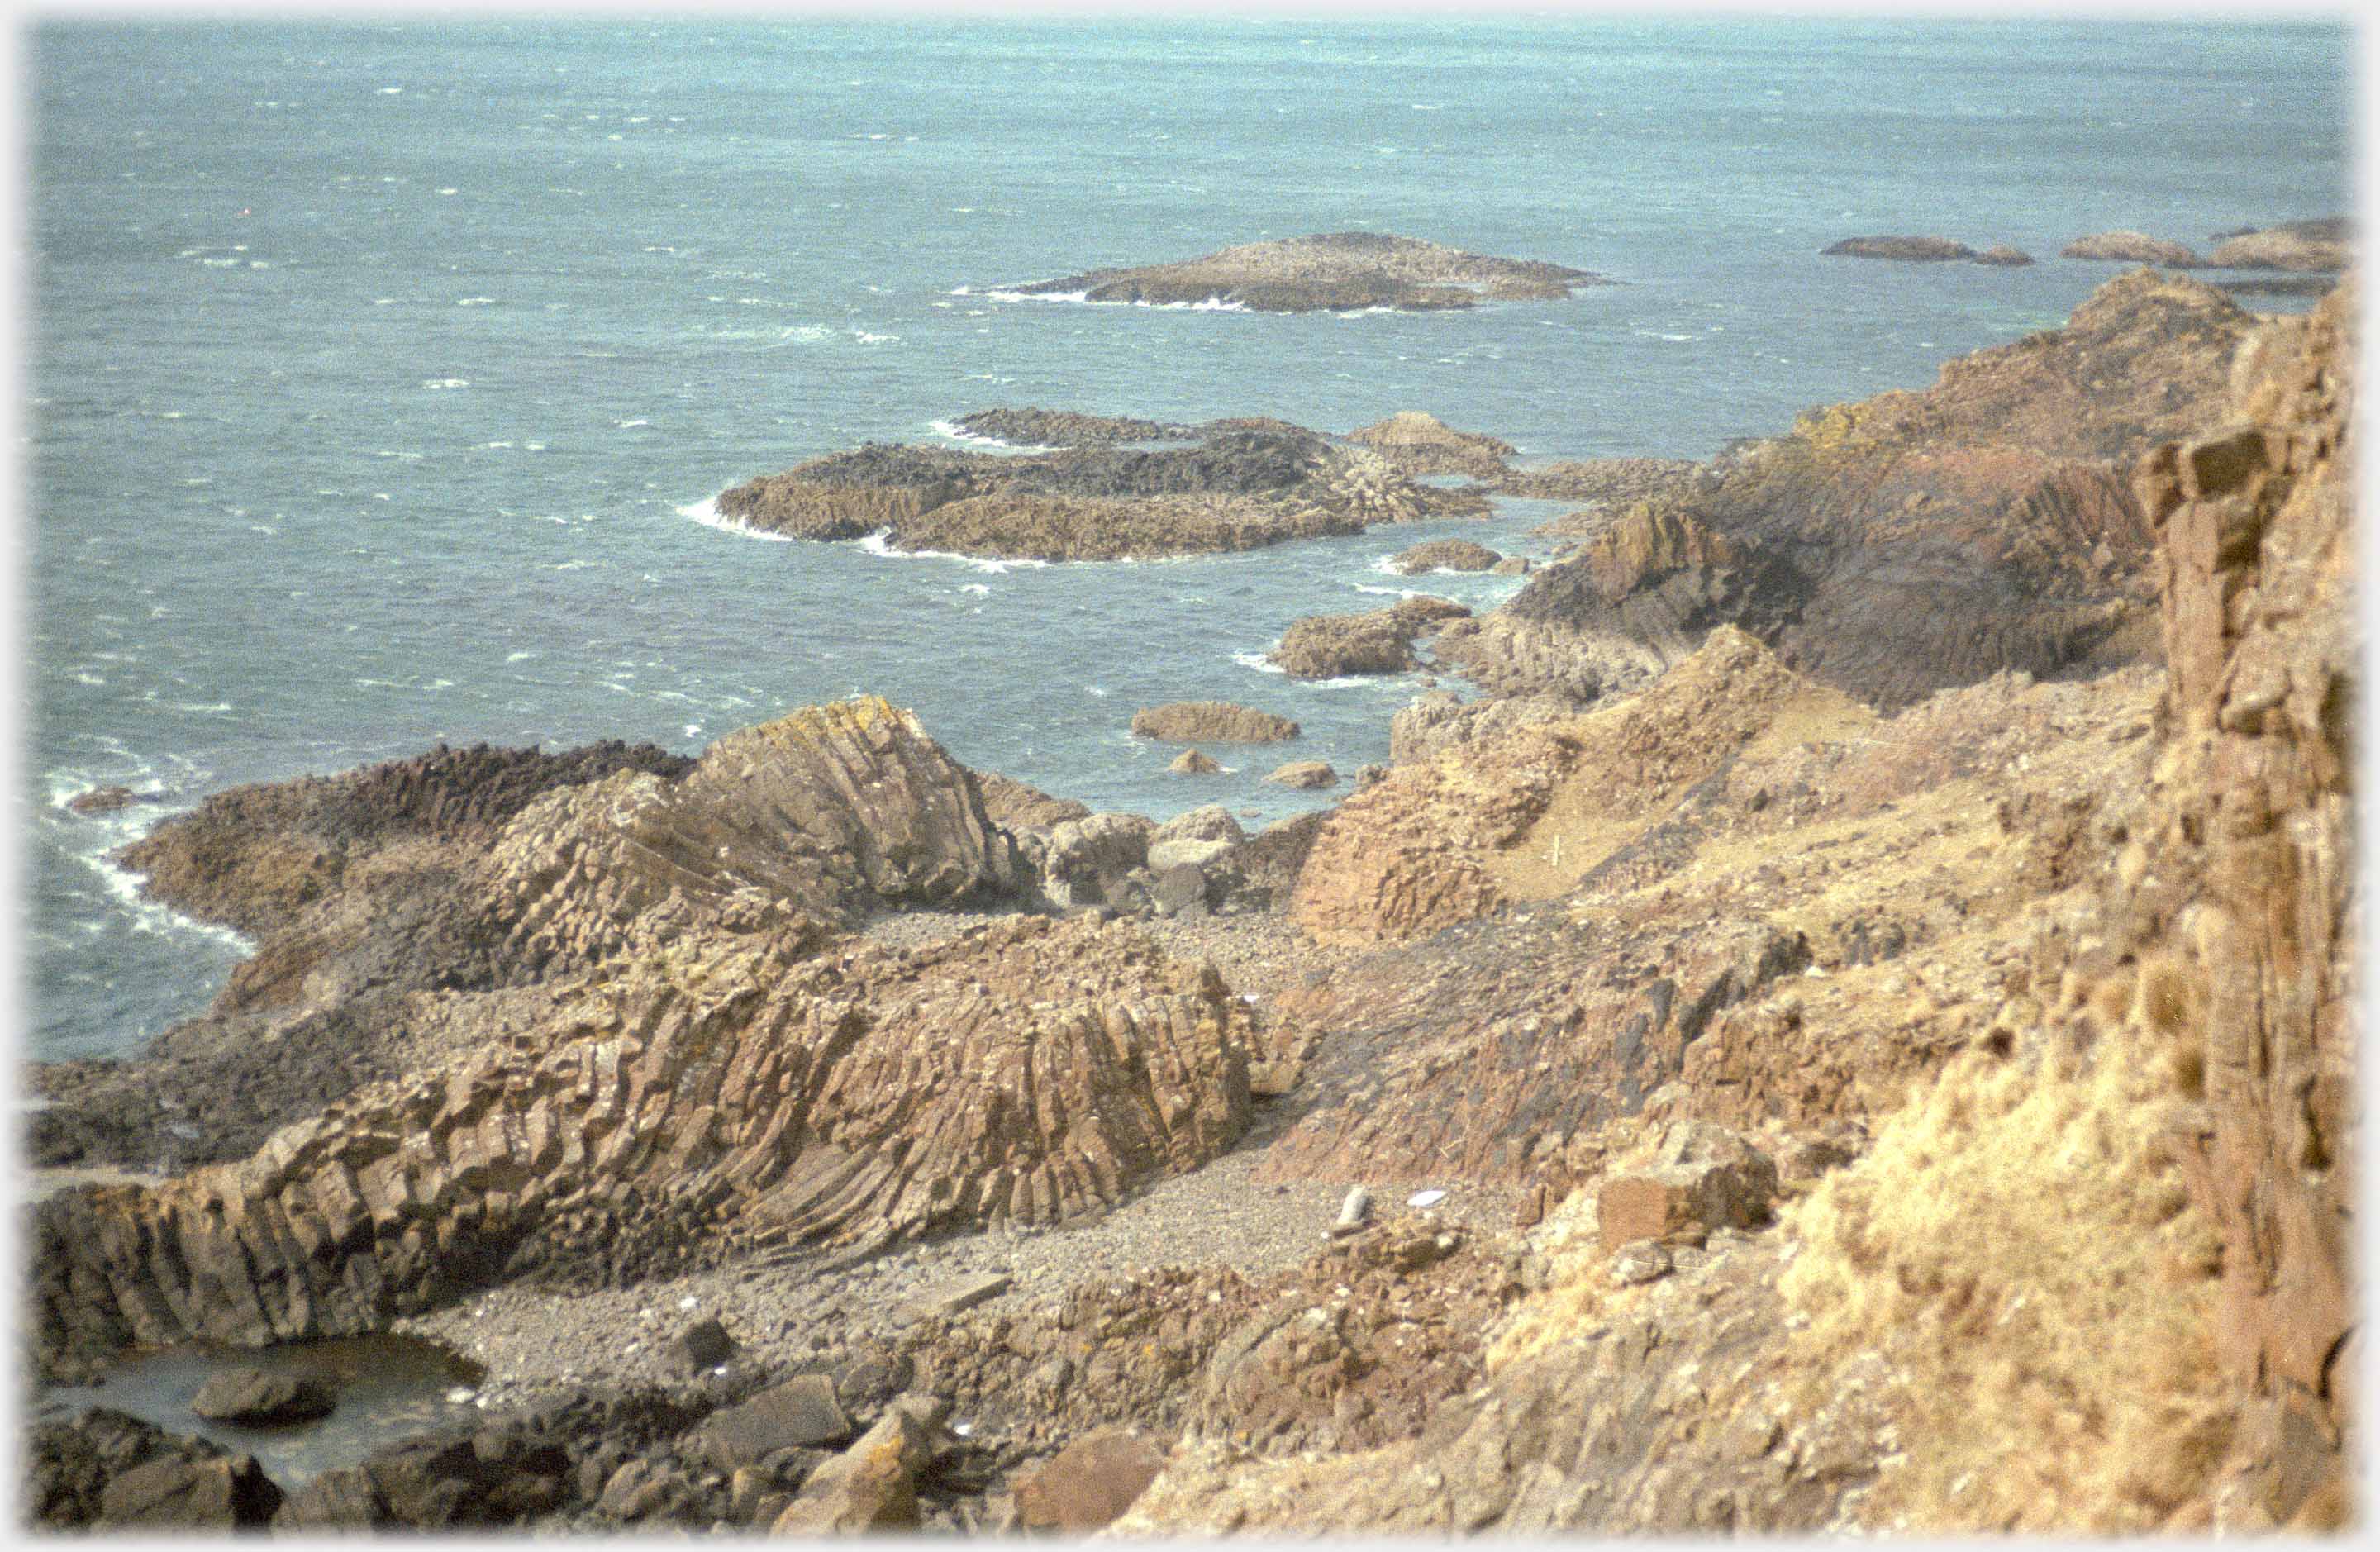 swirl of basalt columns by sea.